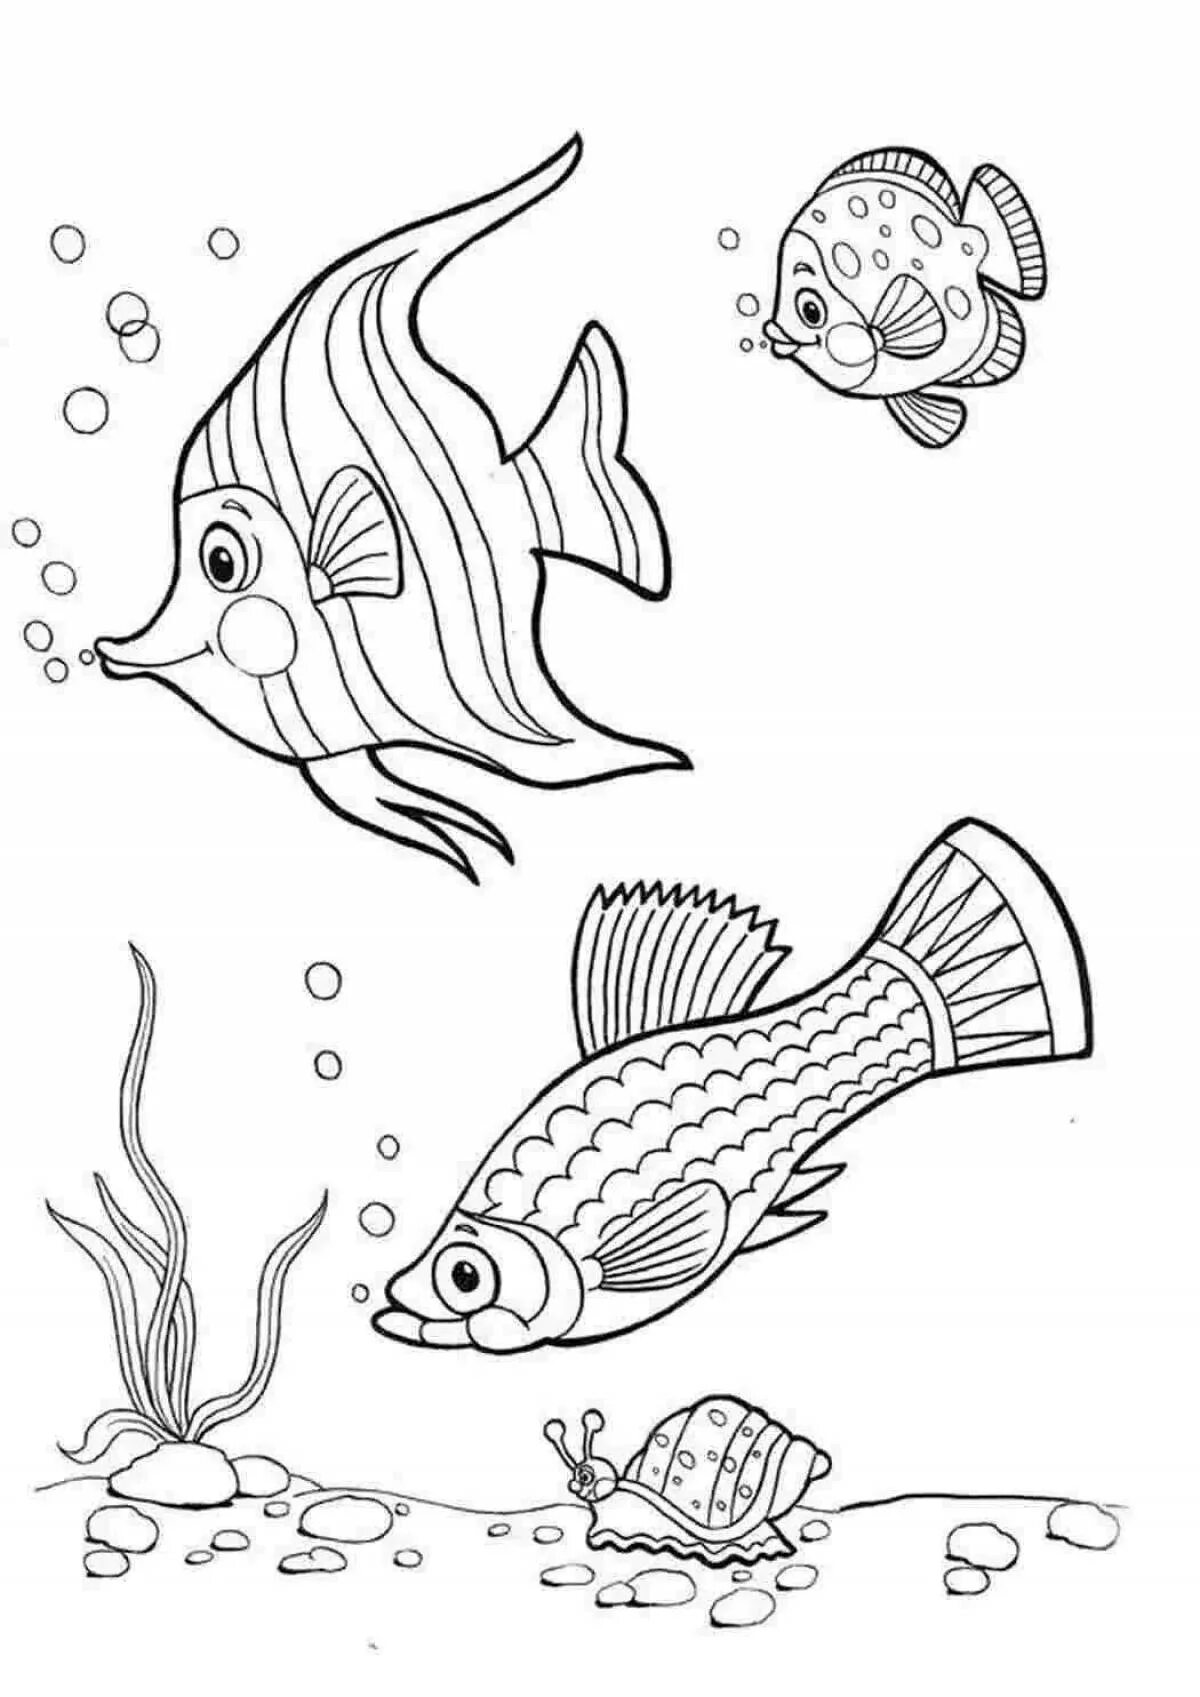 Раскраска рыбы для детей 6 лет. Раскраска рыбка. Аквариумные рыбки раскраска. Рыбка раскраска для детей. Рыба раскраска для детей.